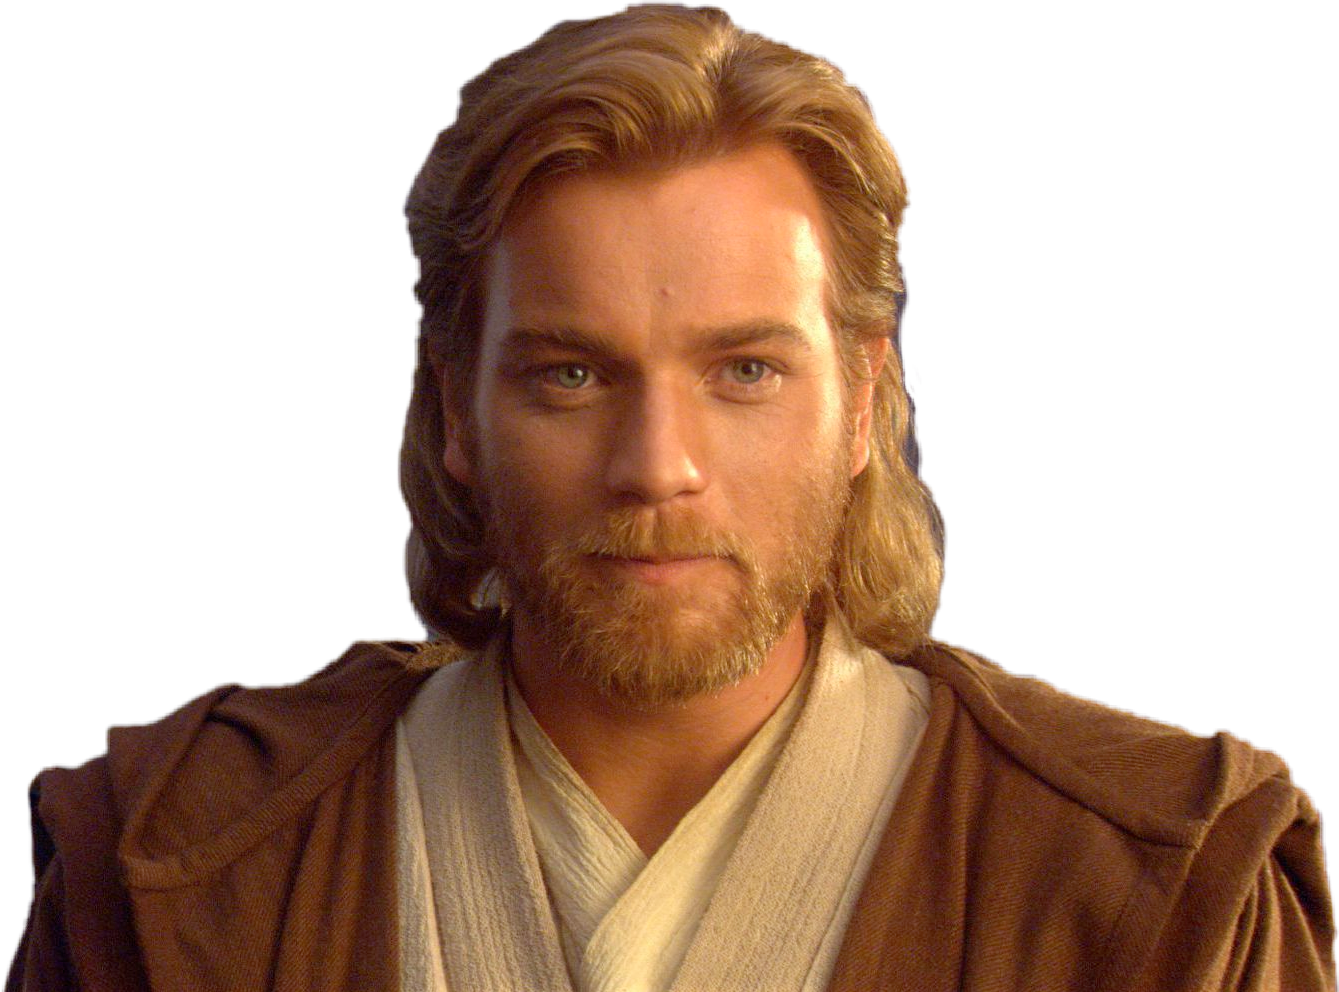 Star Wars Obi Wan Kenobi PNG High Quality Image.